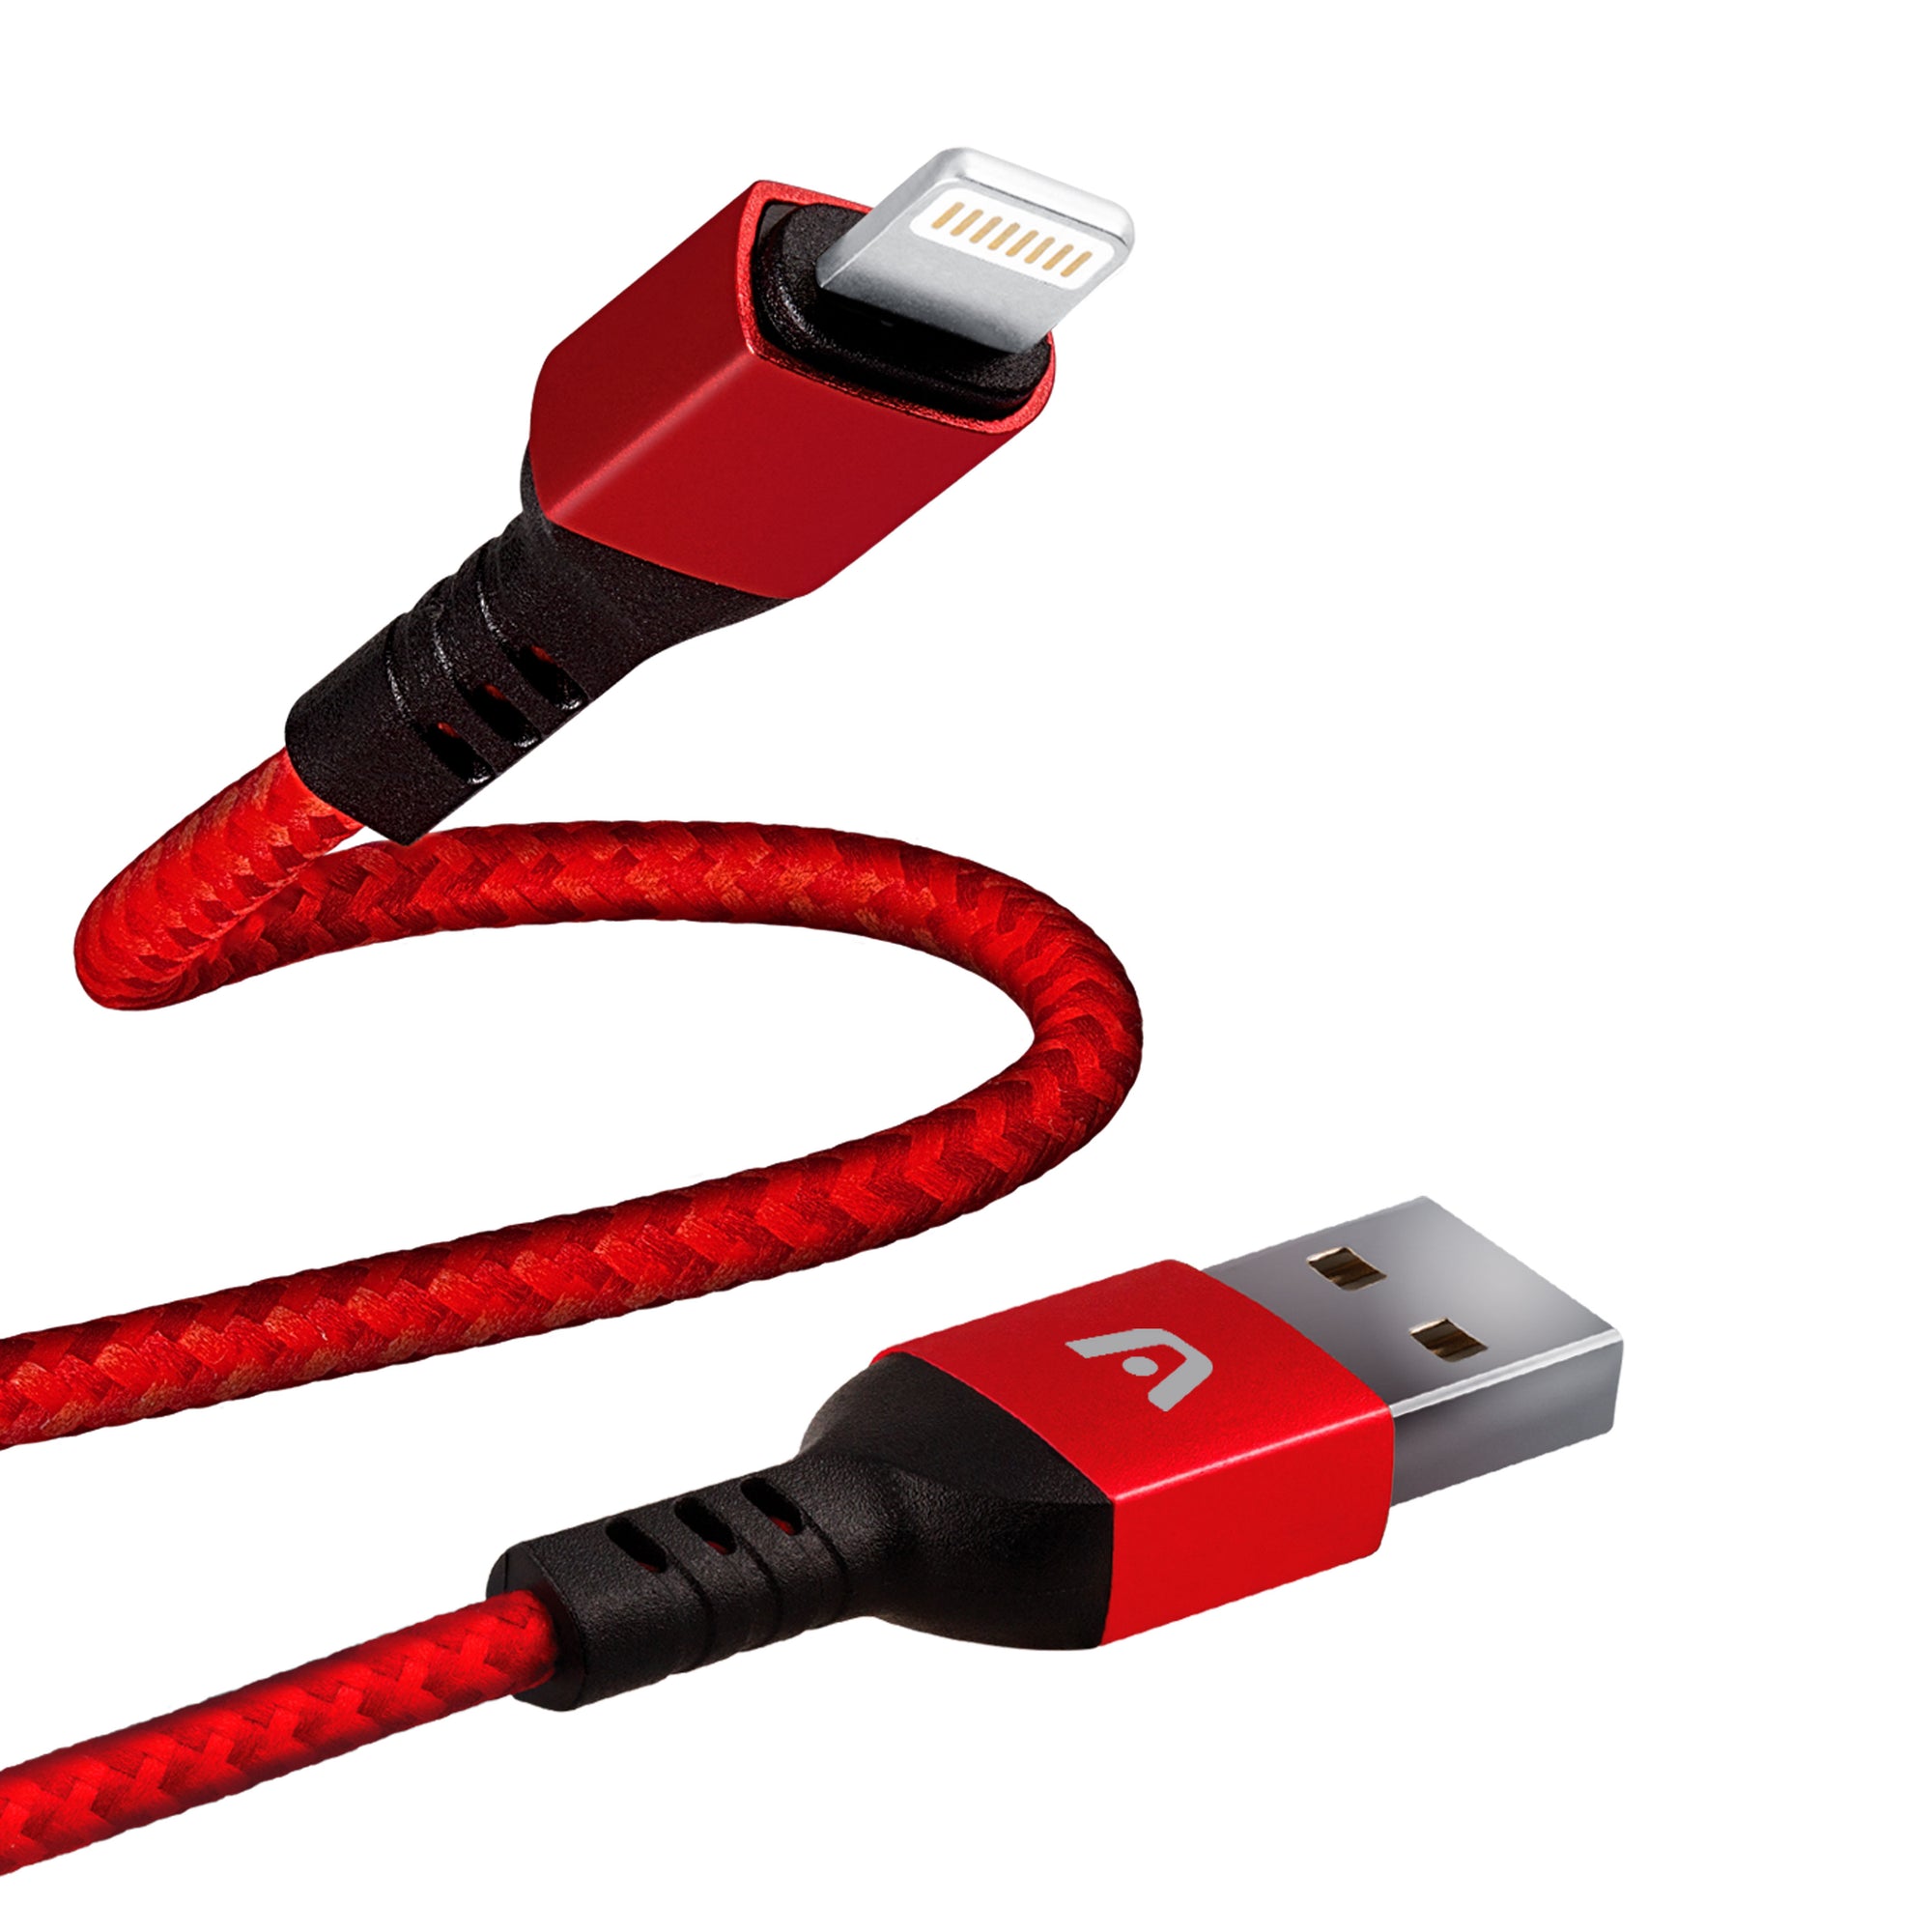 Cable Lightning to USB 2.0 Nylon Braided Dura Form